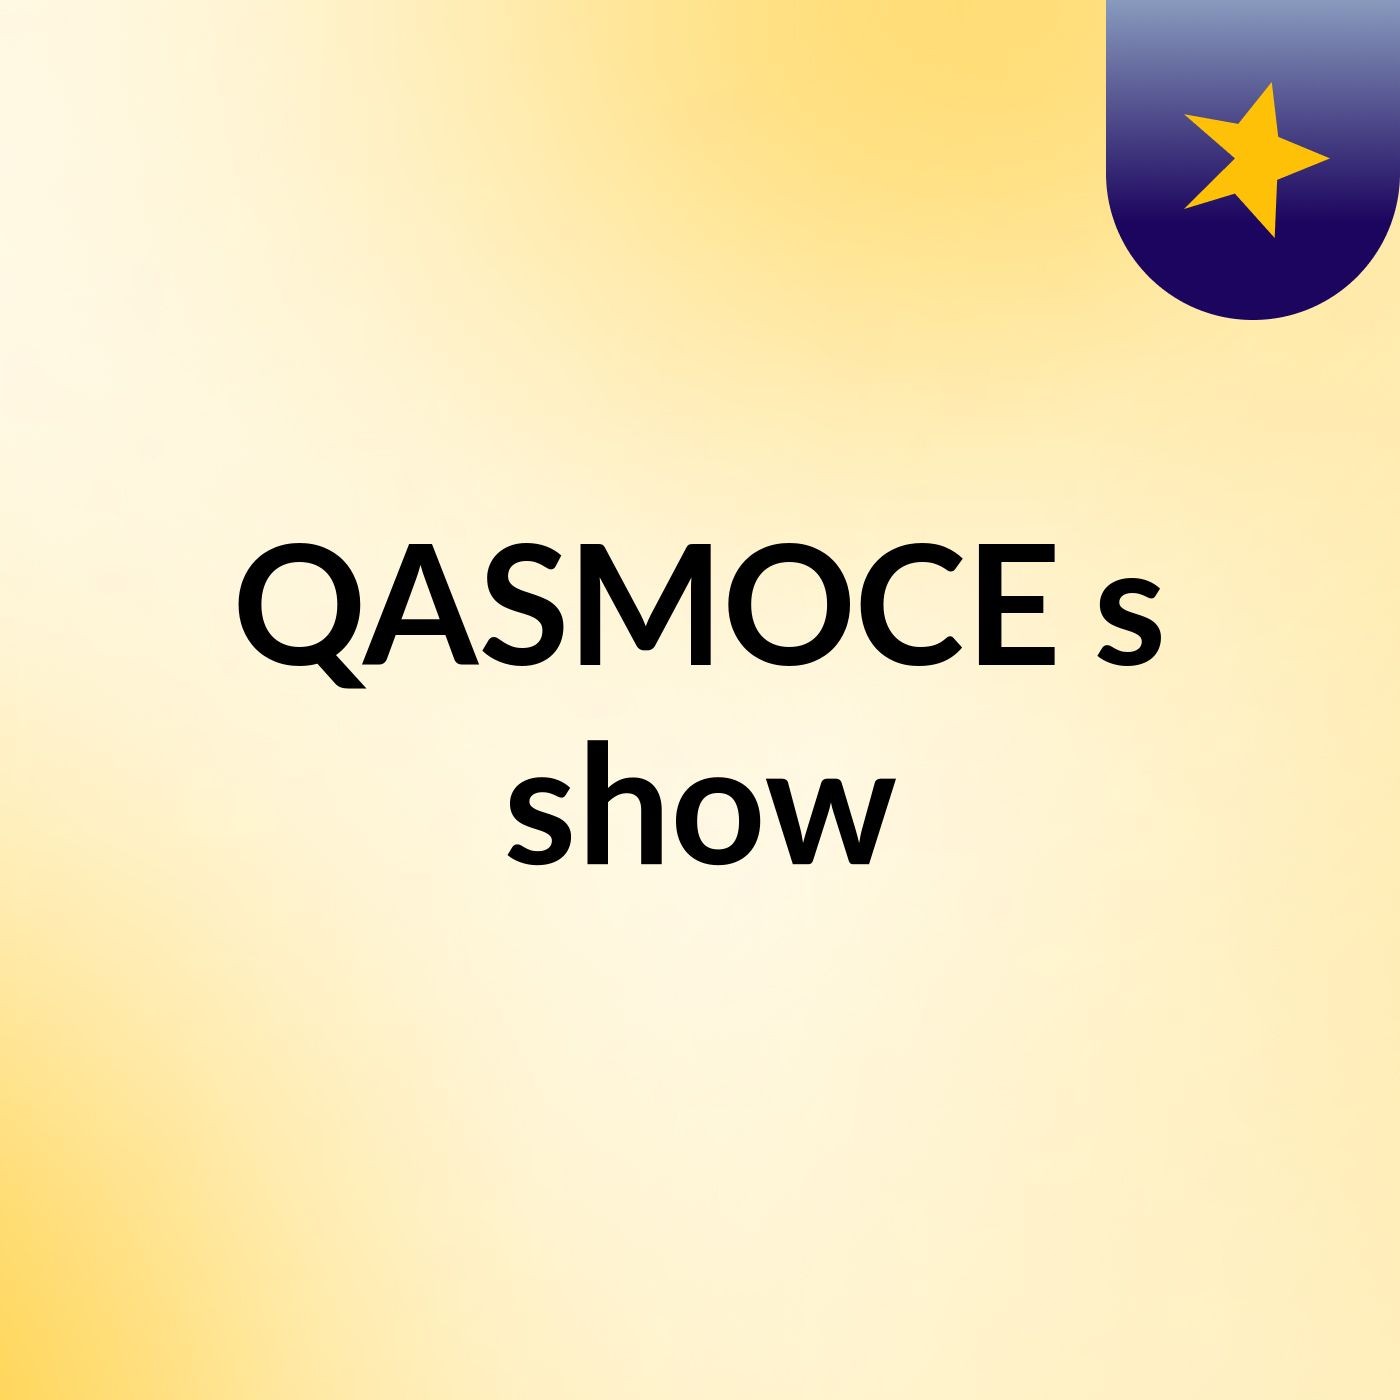 QASMOCE's show